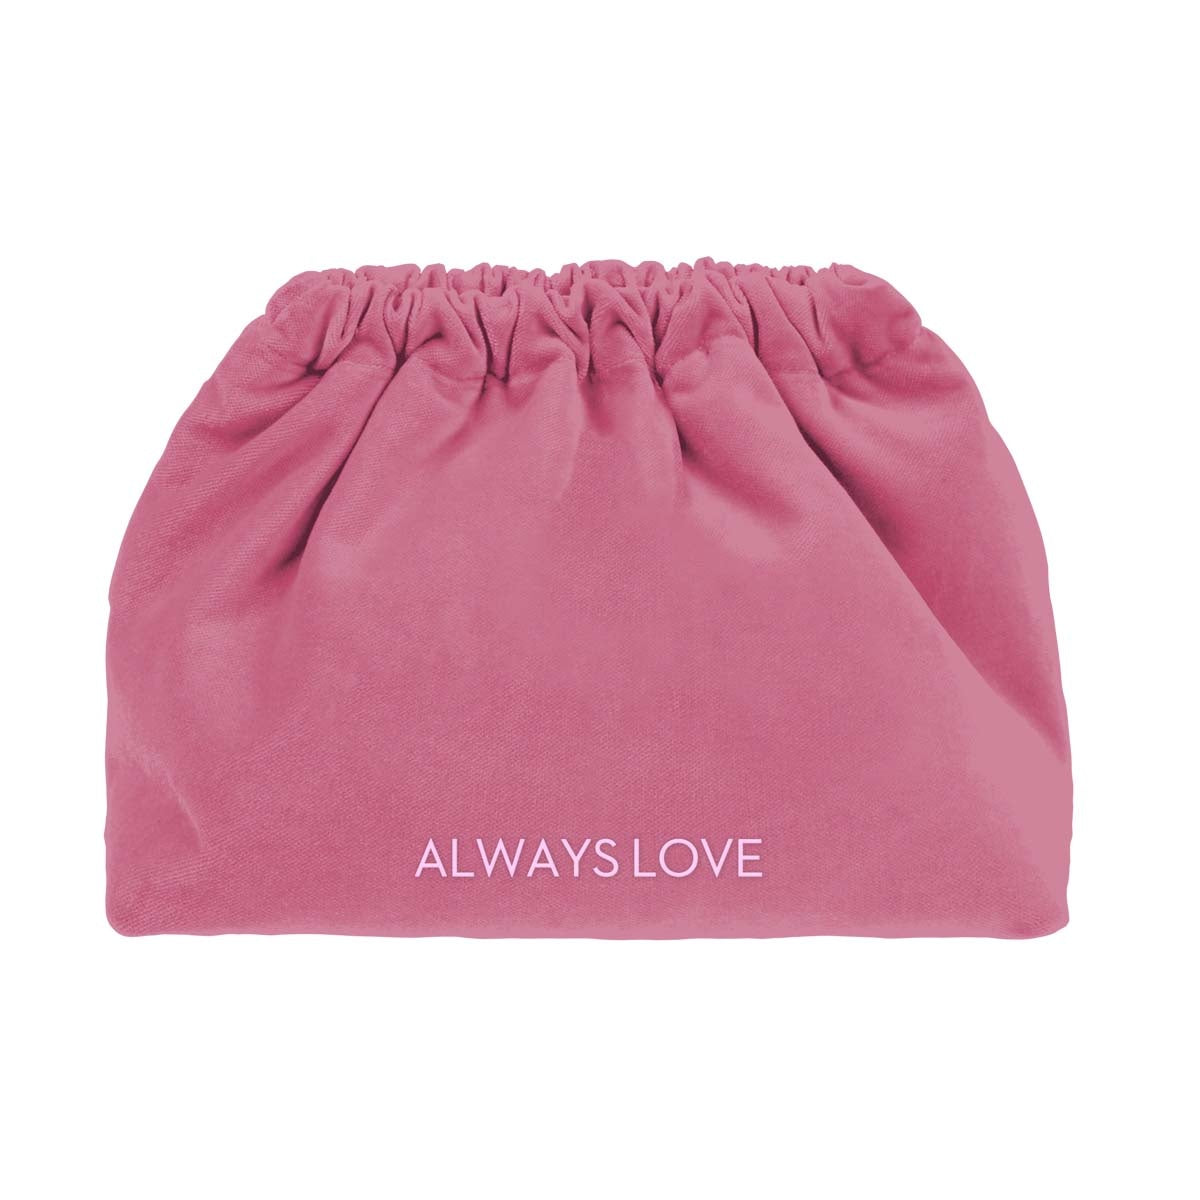 Always Love - Velvet Clutch Bag